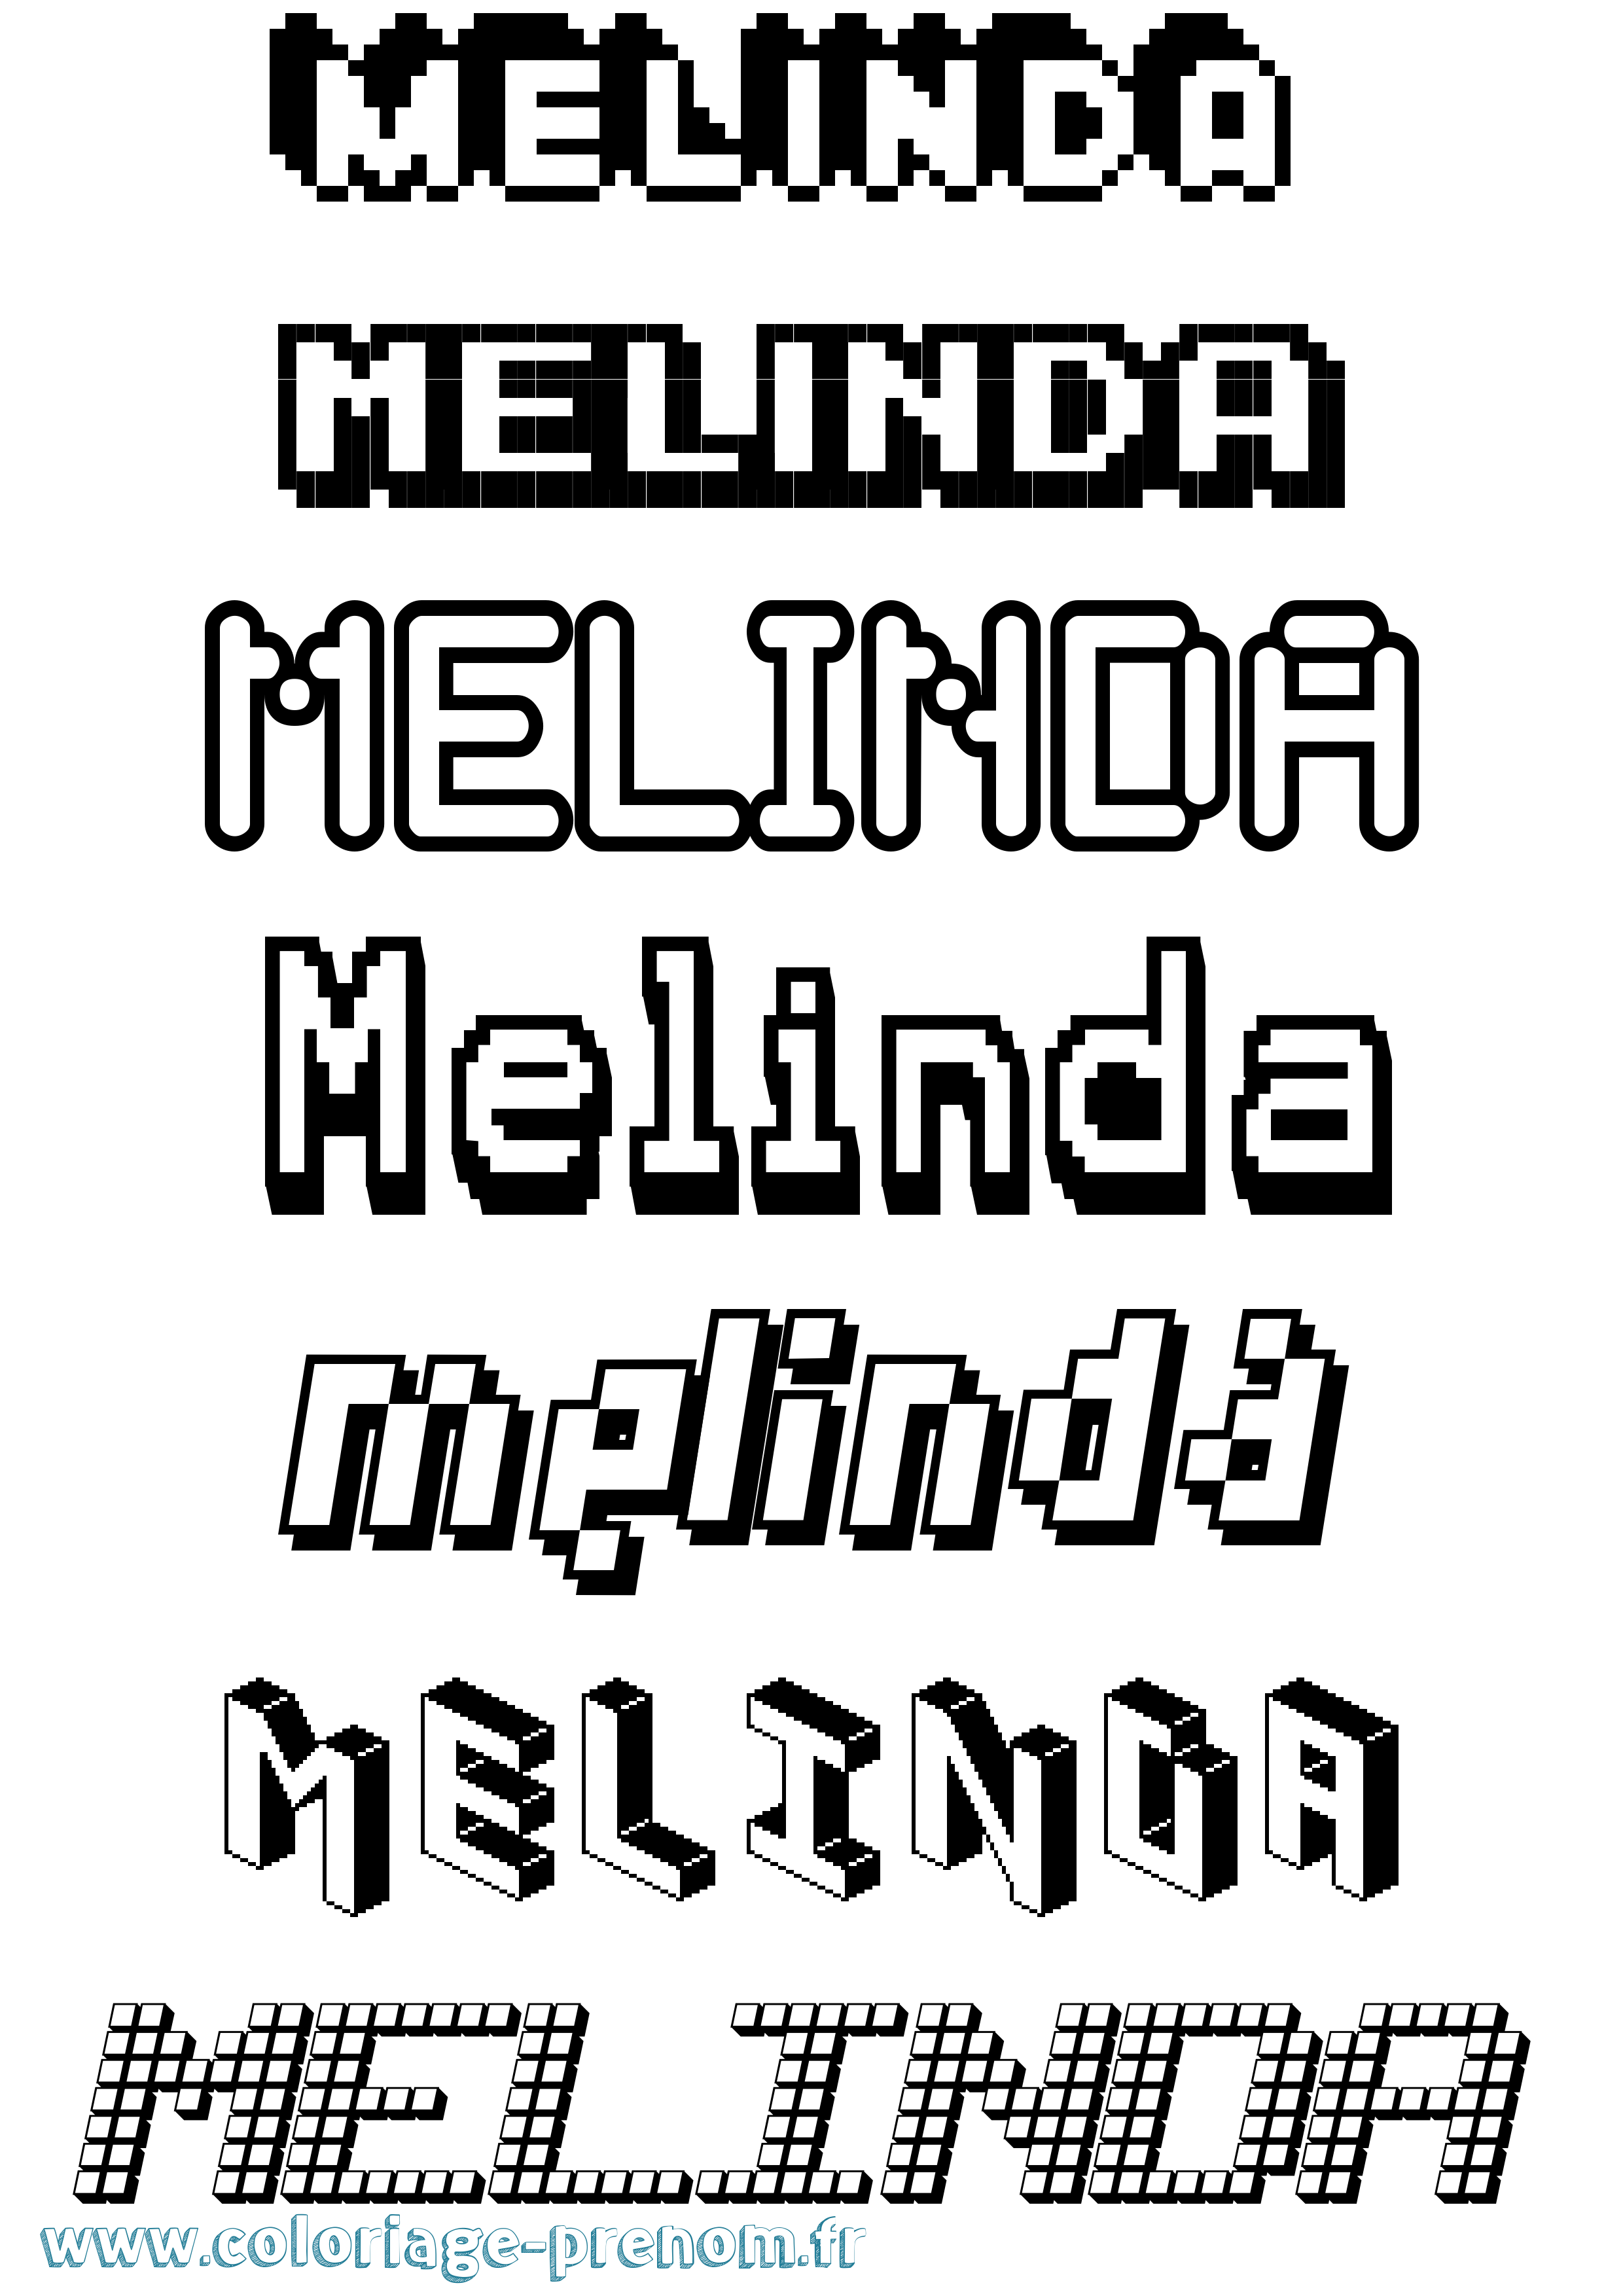 Coloriage prénom Melinda Pixel